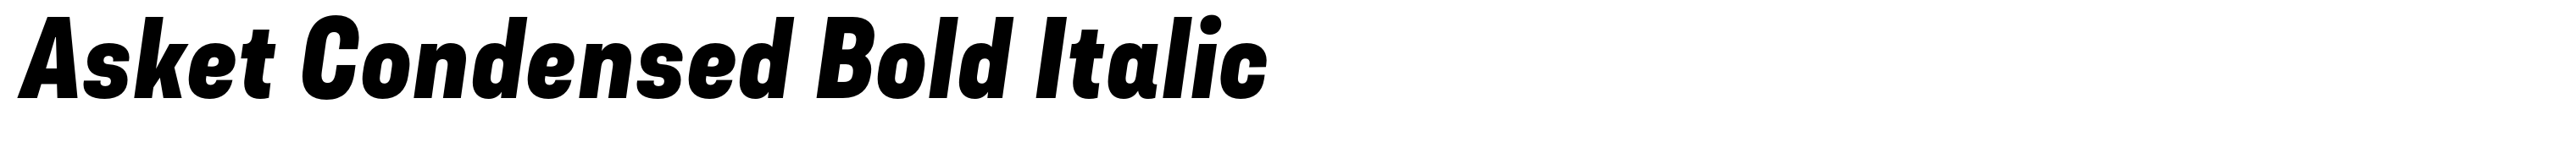 Asket Condensed Bold Italic